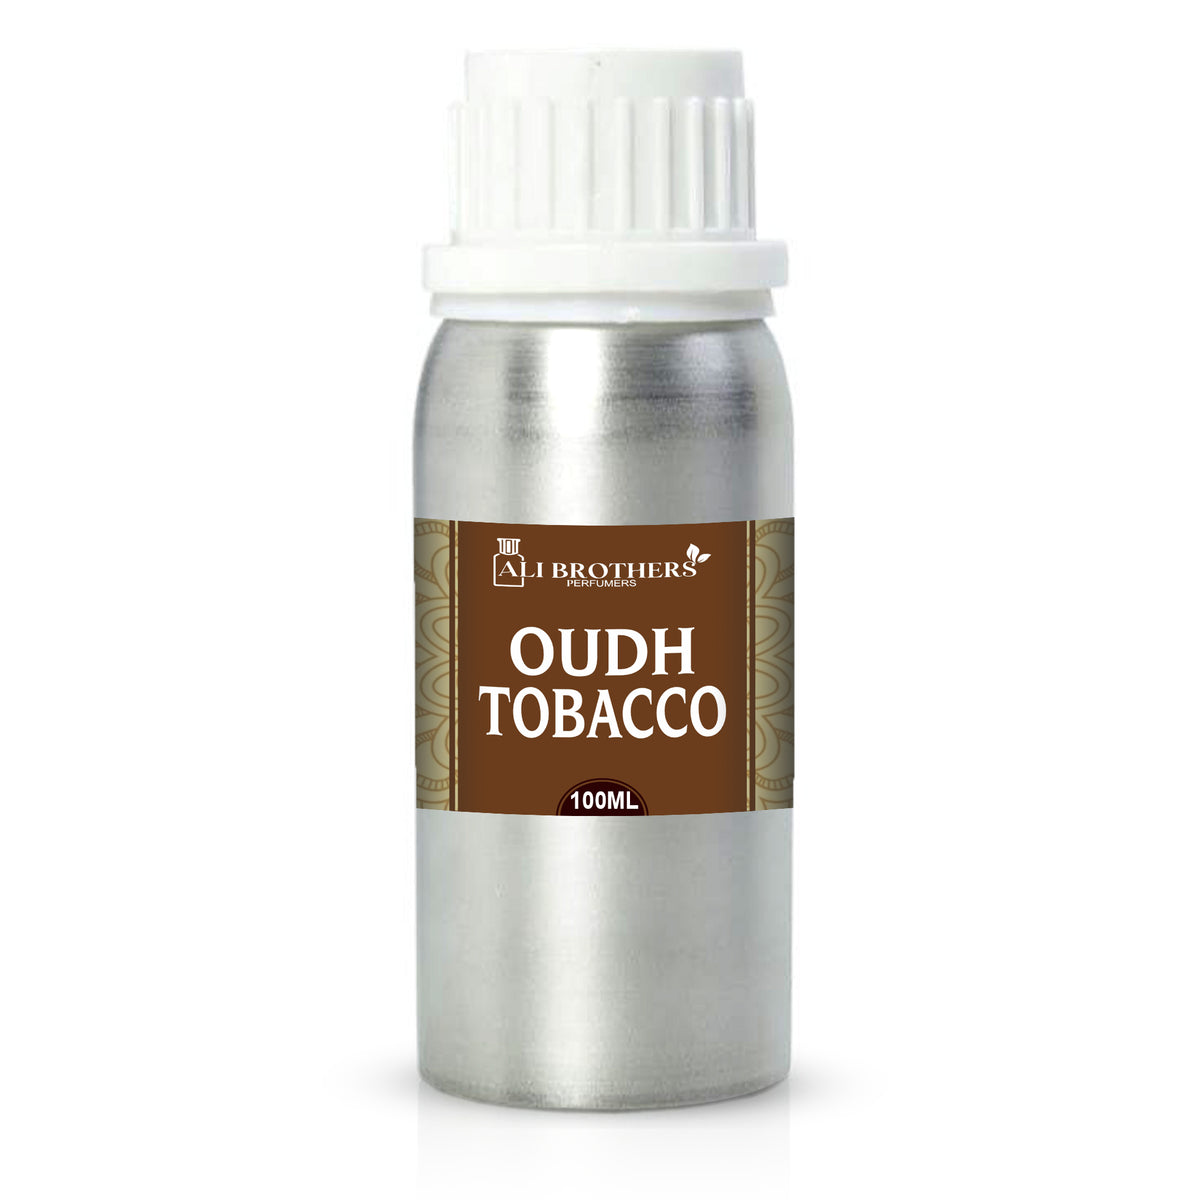 Oud Tobacco